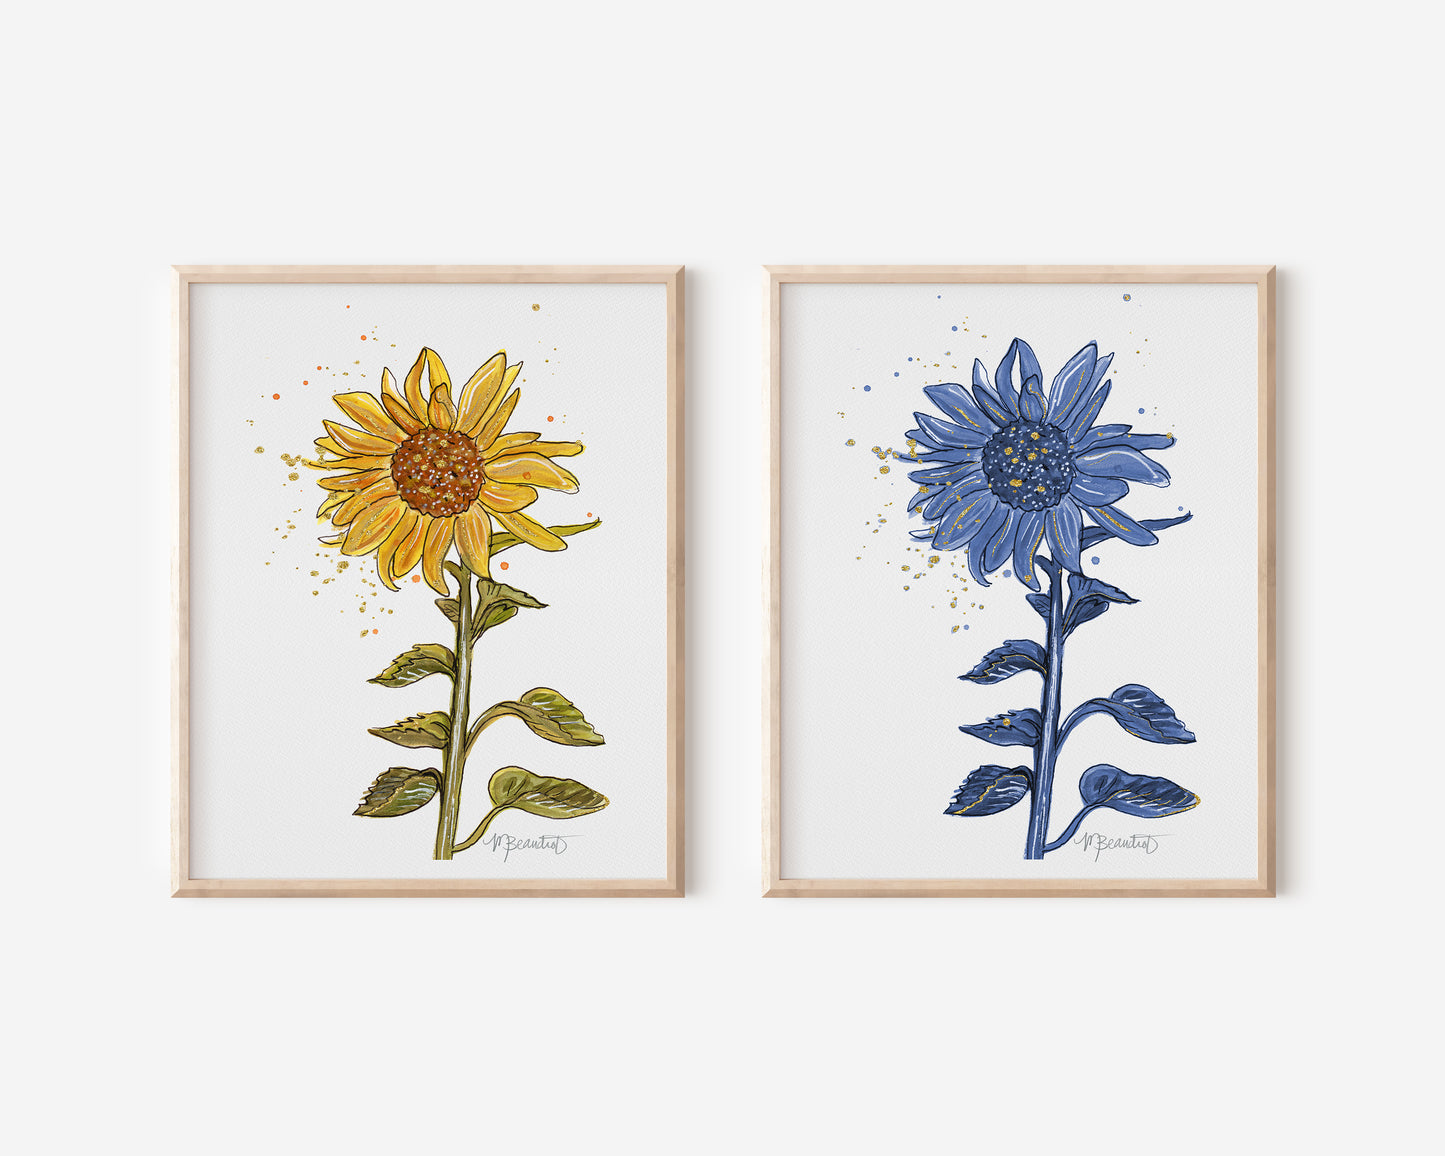 Sunflower Watercolor Art Print